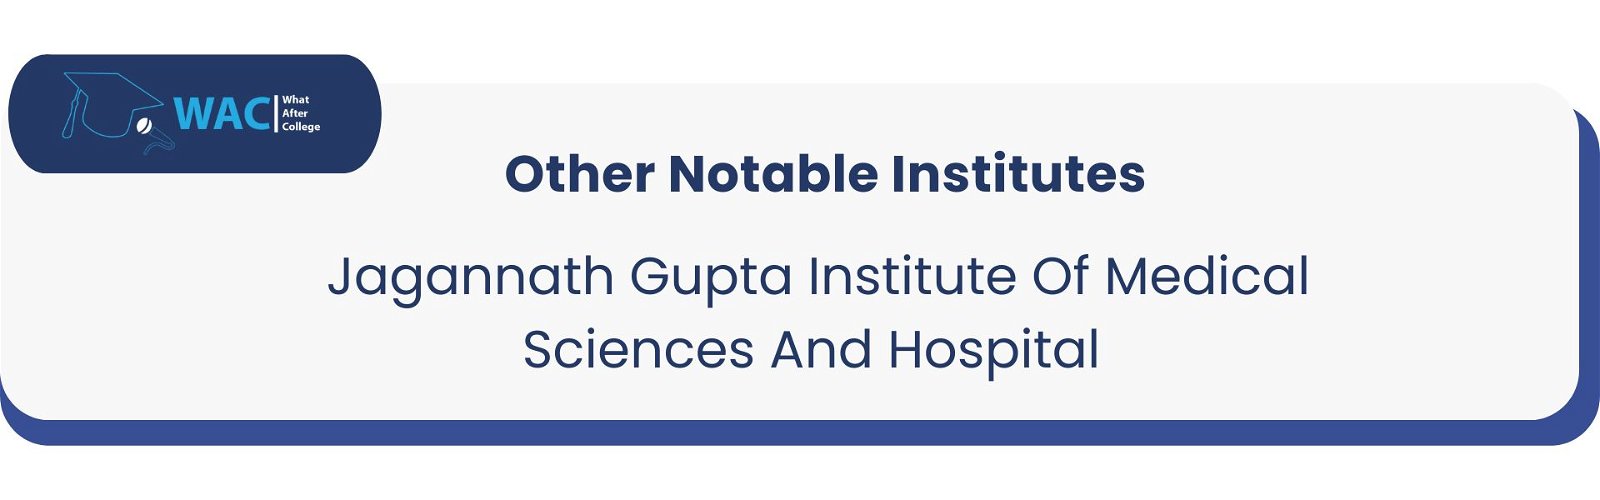 Jagannath Gupta Institute Of Medical Sciences And Hospital